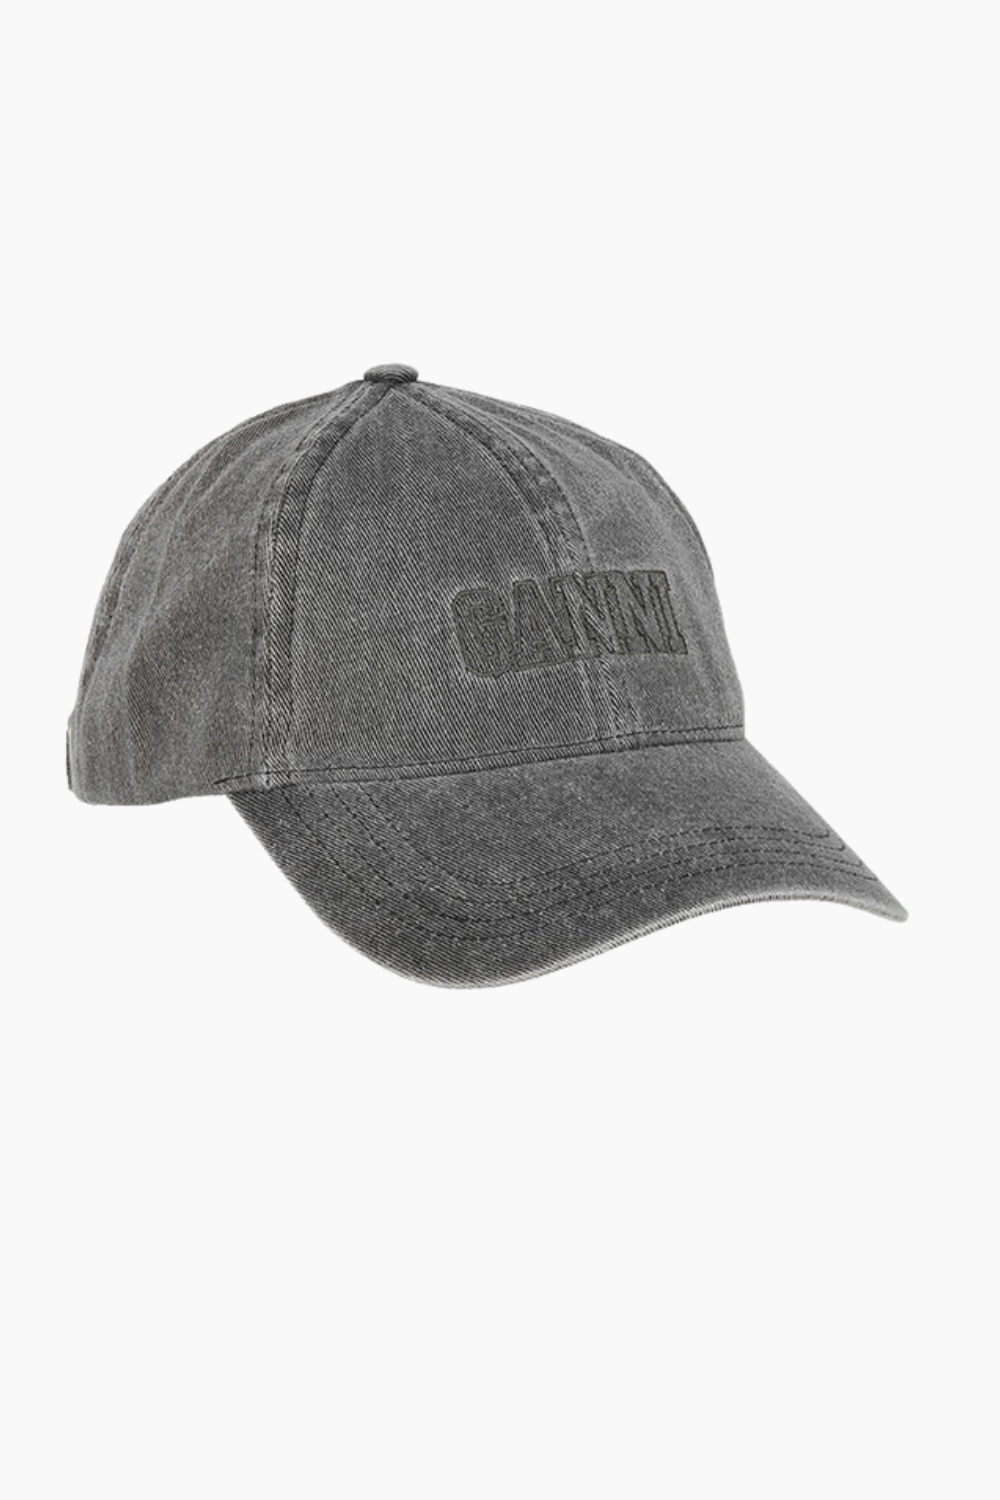 Cap Hat Denim A5759 - Black - GANNI - Grå One Size